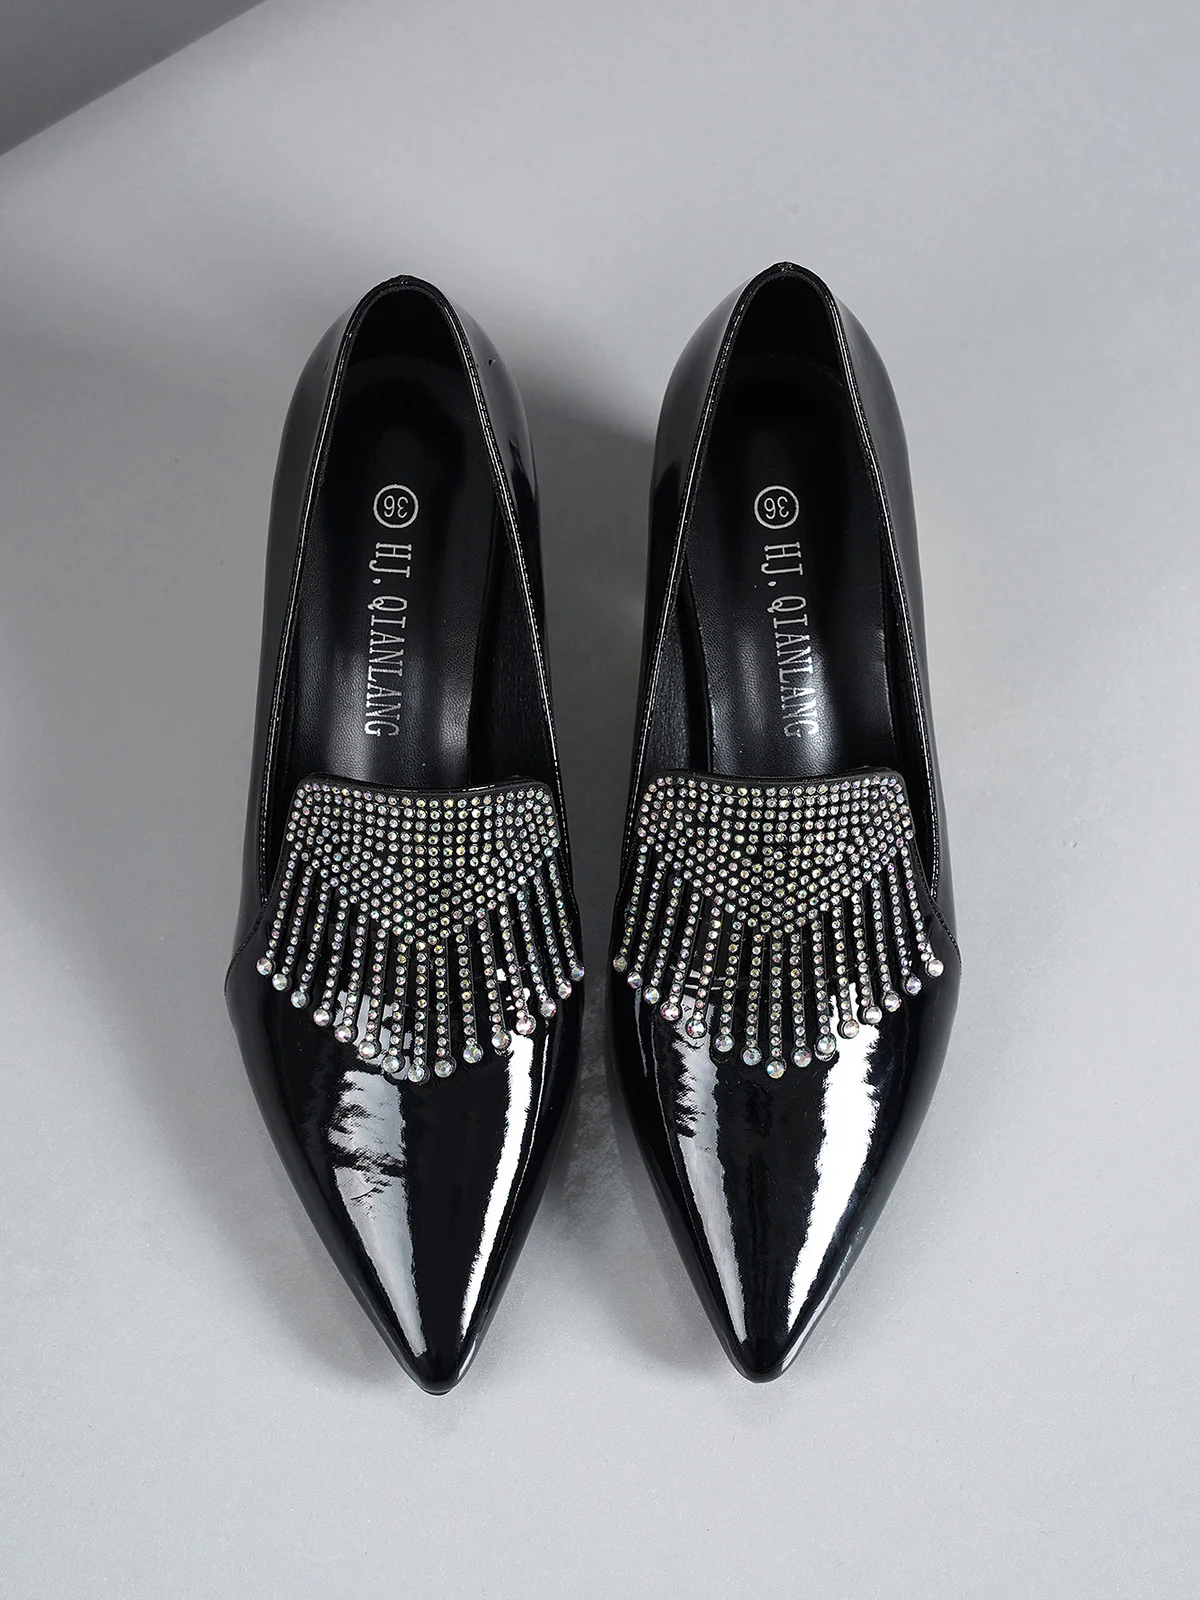 Rhinestone Patent Leather Pumps Spool Heel Dress Shoes